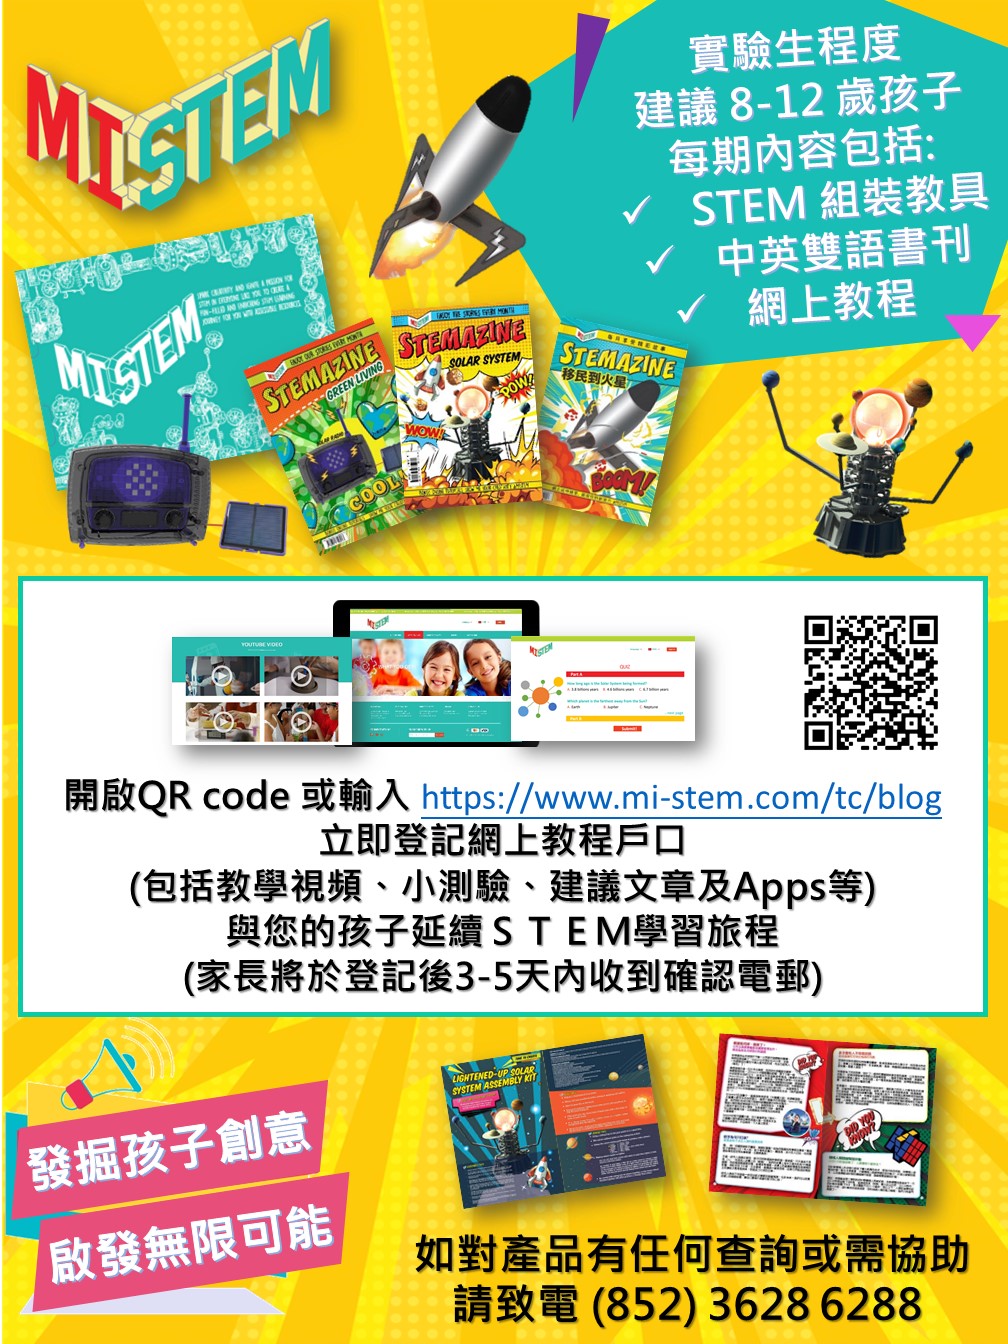 MI STEM 學習盒 - 登記網上教程戶口 (Dr. Max 客戶專用) Image